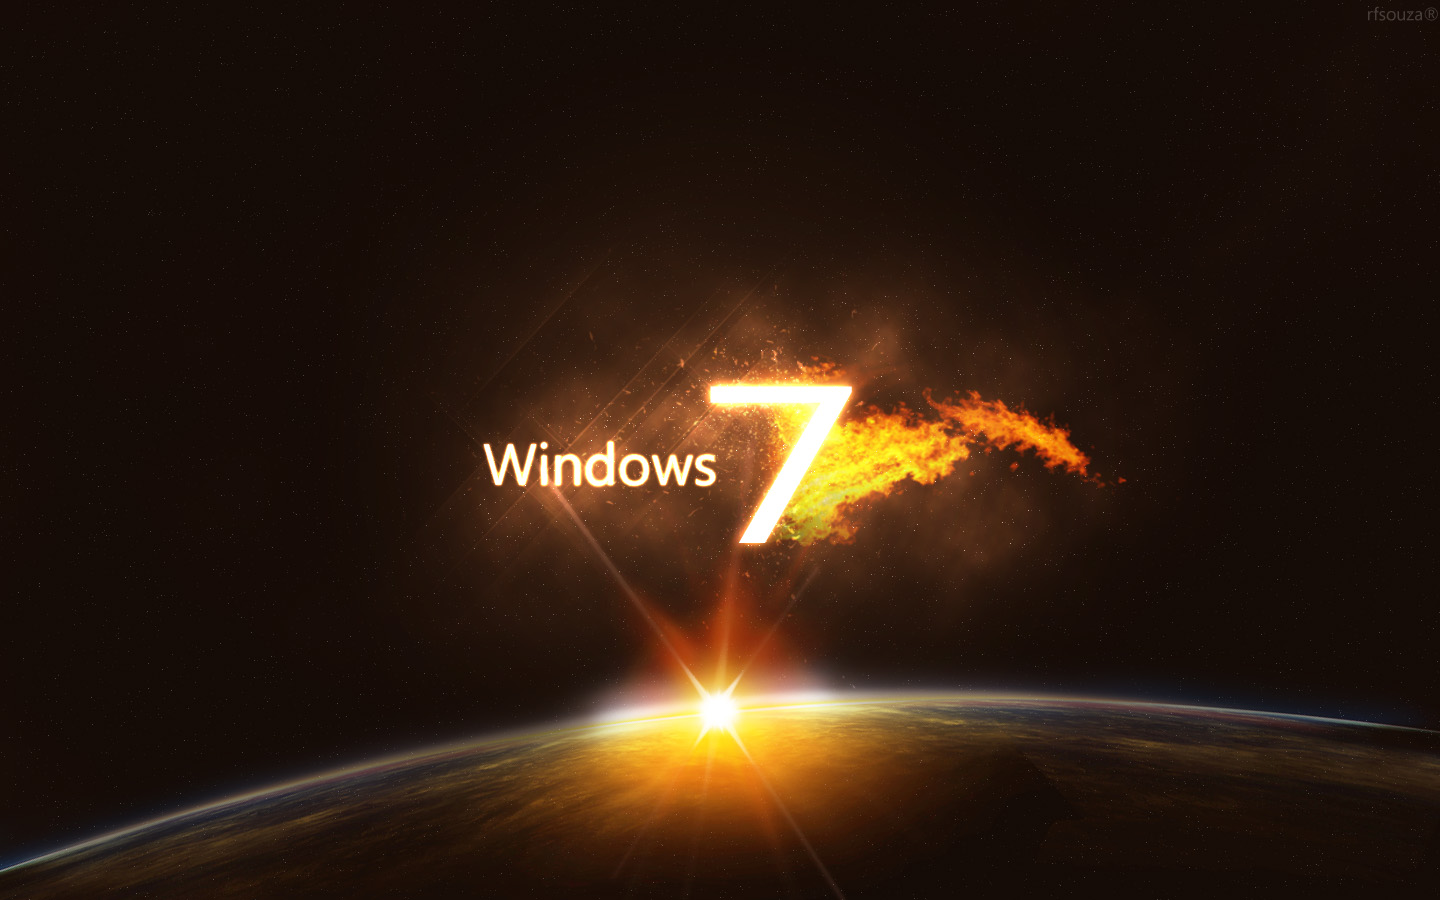 windows 7 futuristic themes